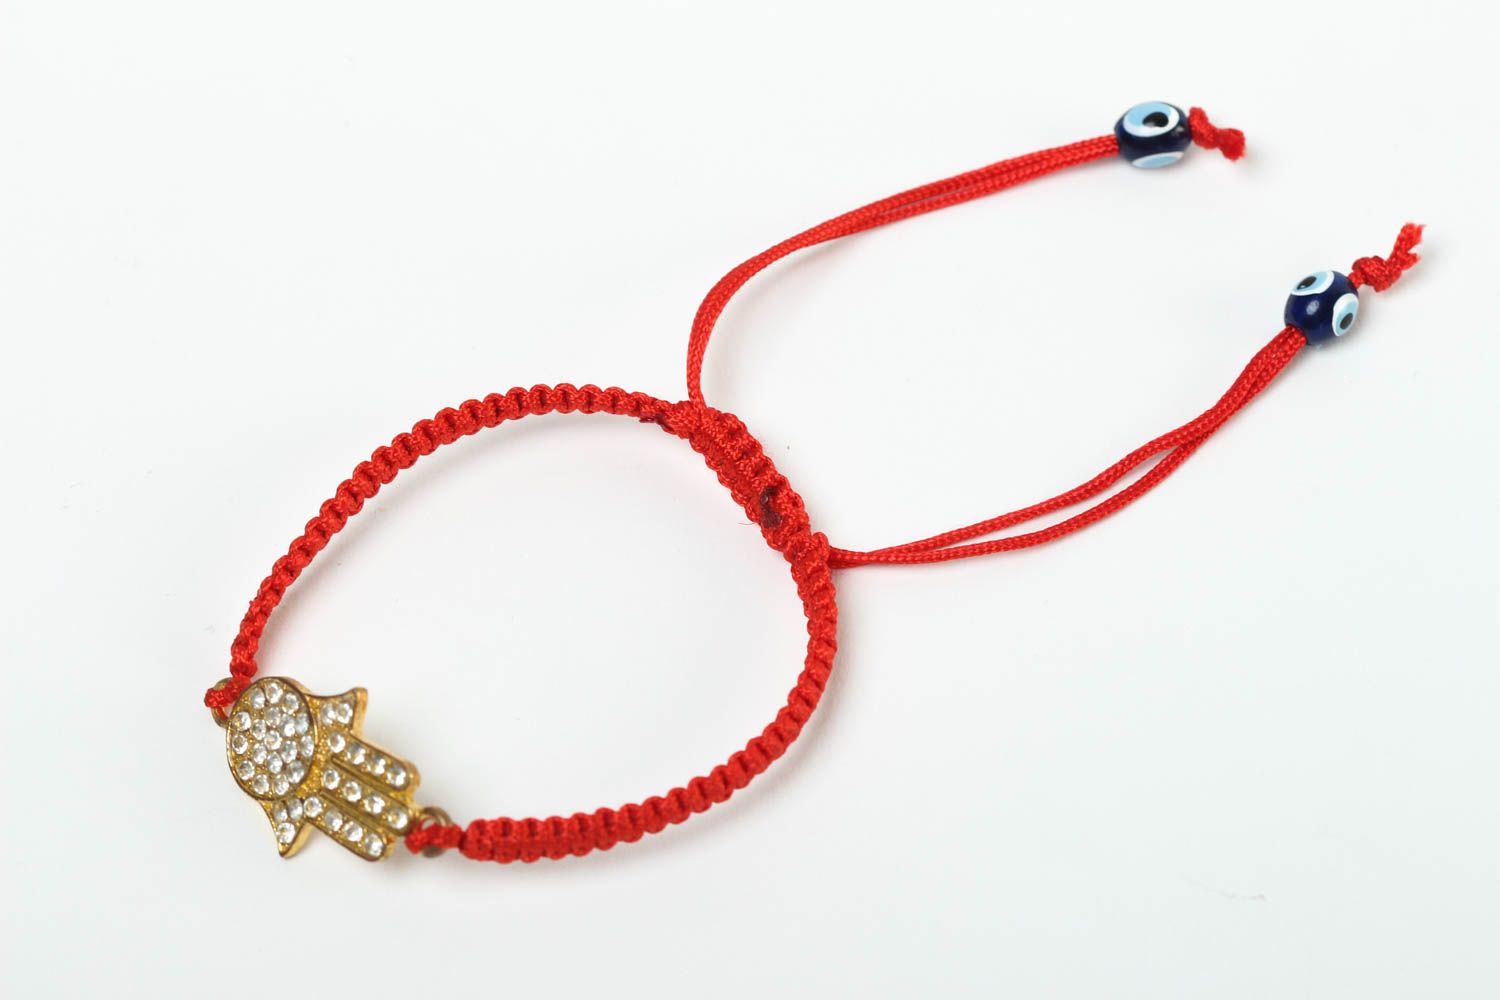 Beautiful handmade friendship bracelet thread bracelet designs artisan jewelry photo 2